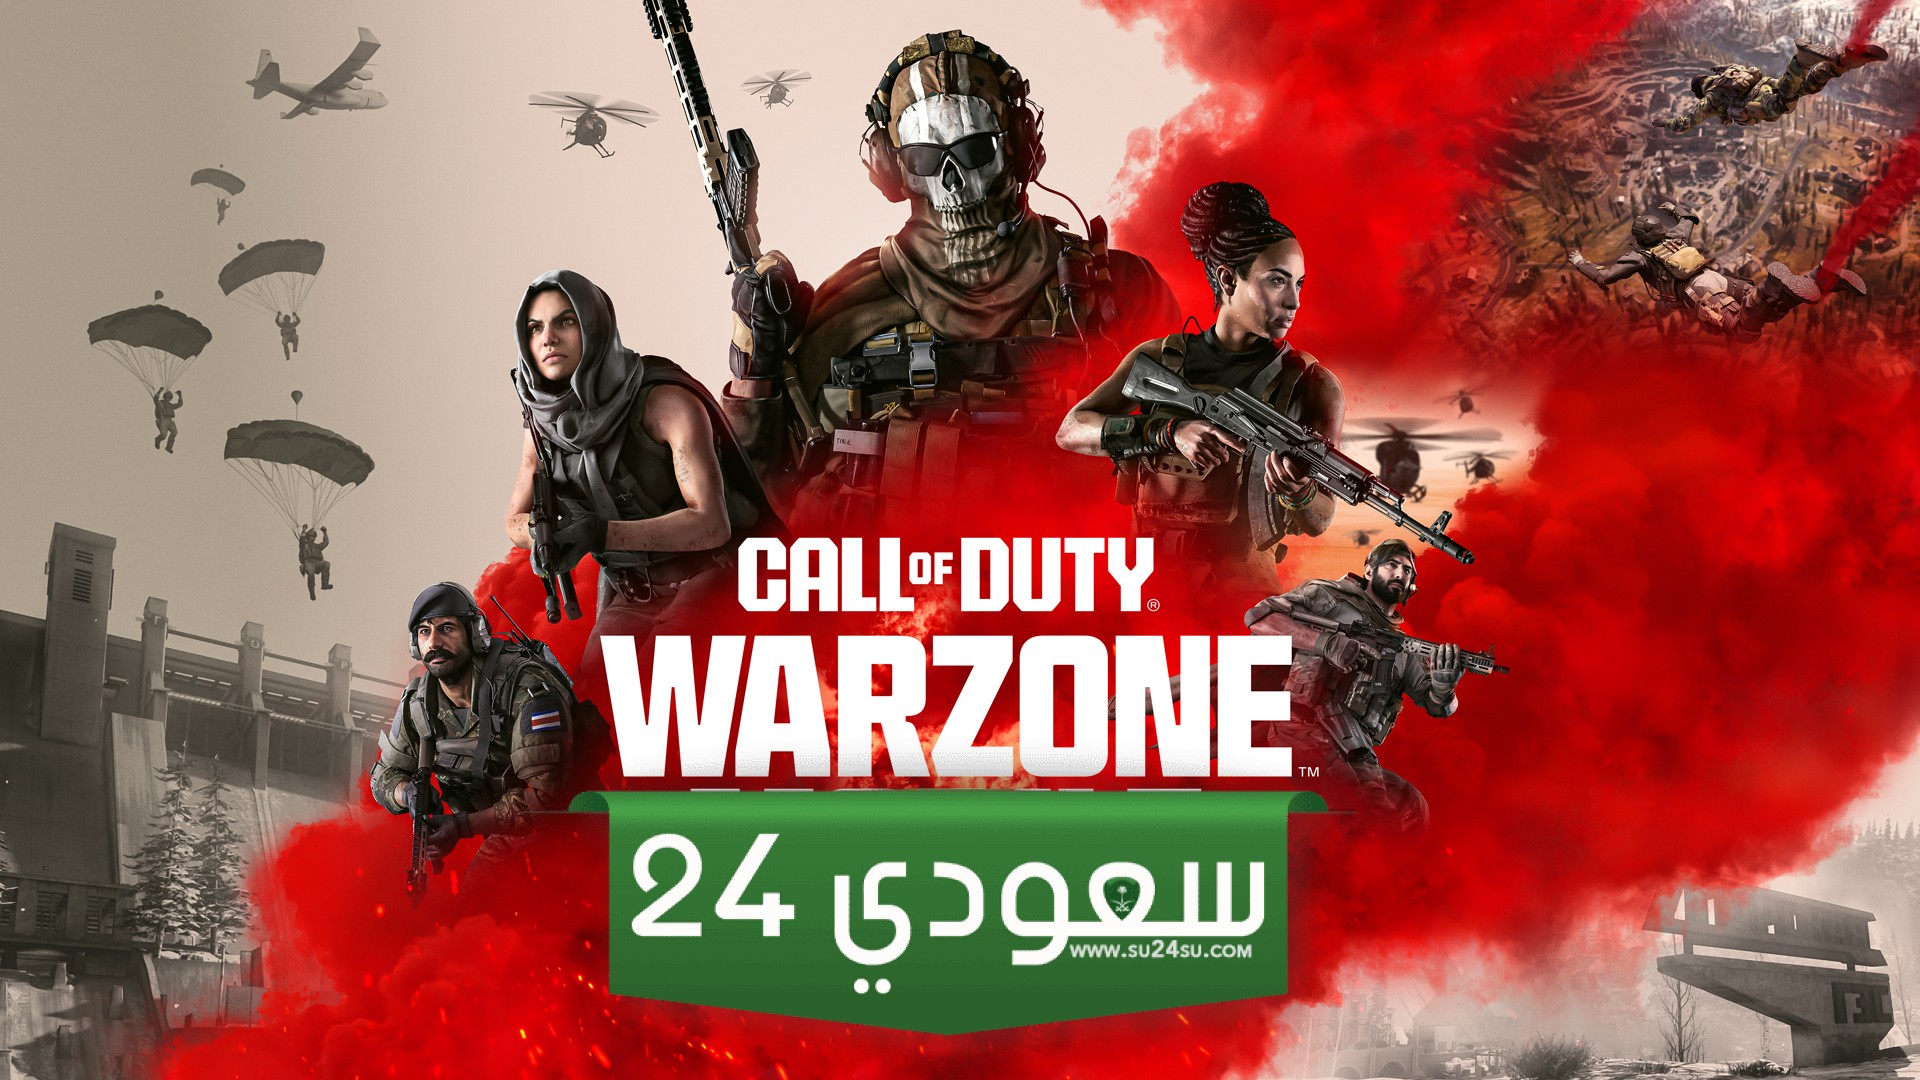 تراجع عائدات إطلاق Call of Duty: Warzone Mobile بنسبة 67%